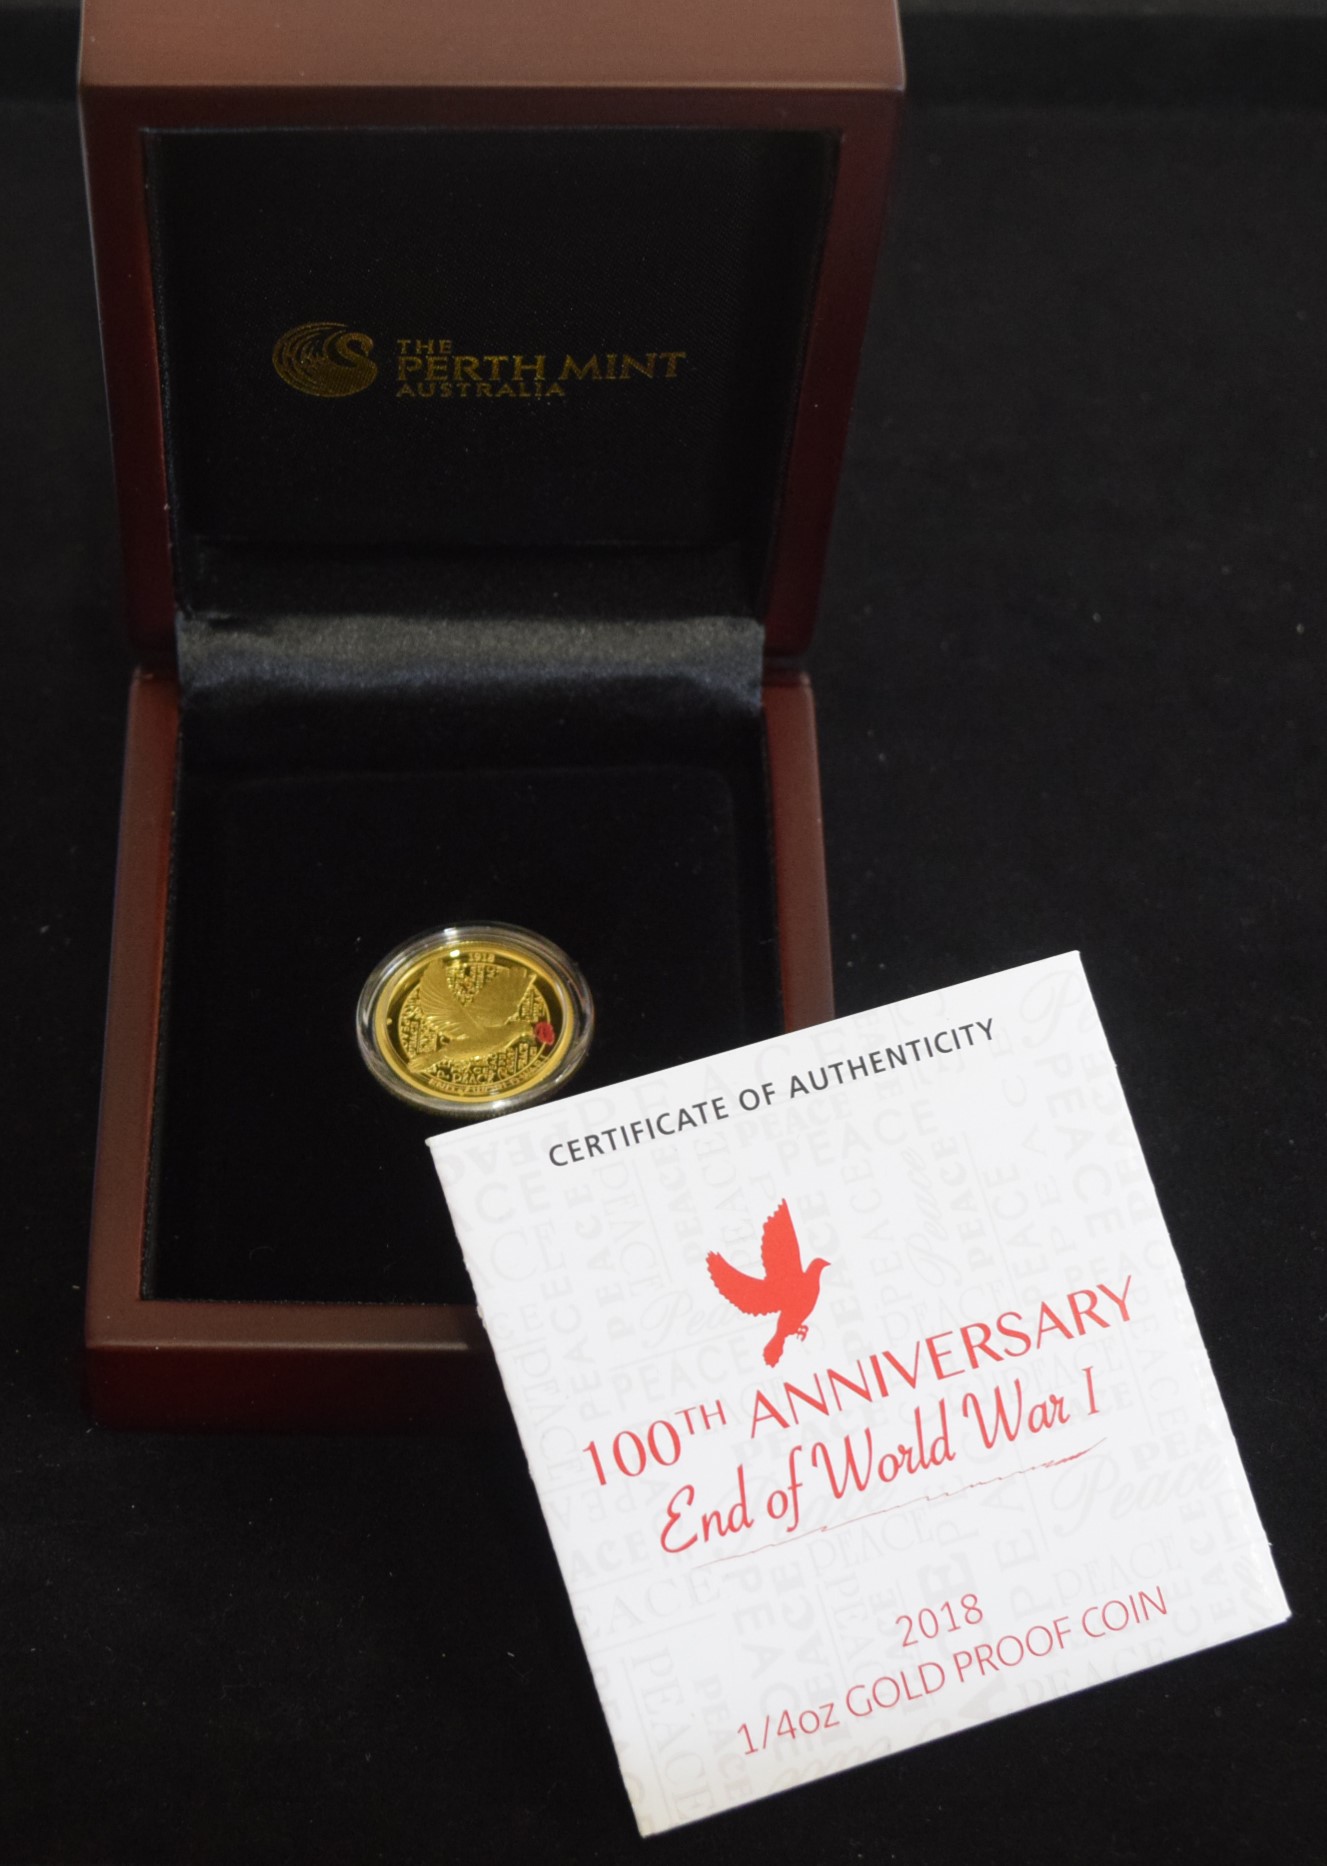 Perth Mint, 100th Anniversary End of World War I, Twenty Five Dollars, 2018, 1/4 oz gold proof coin.